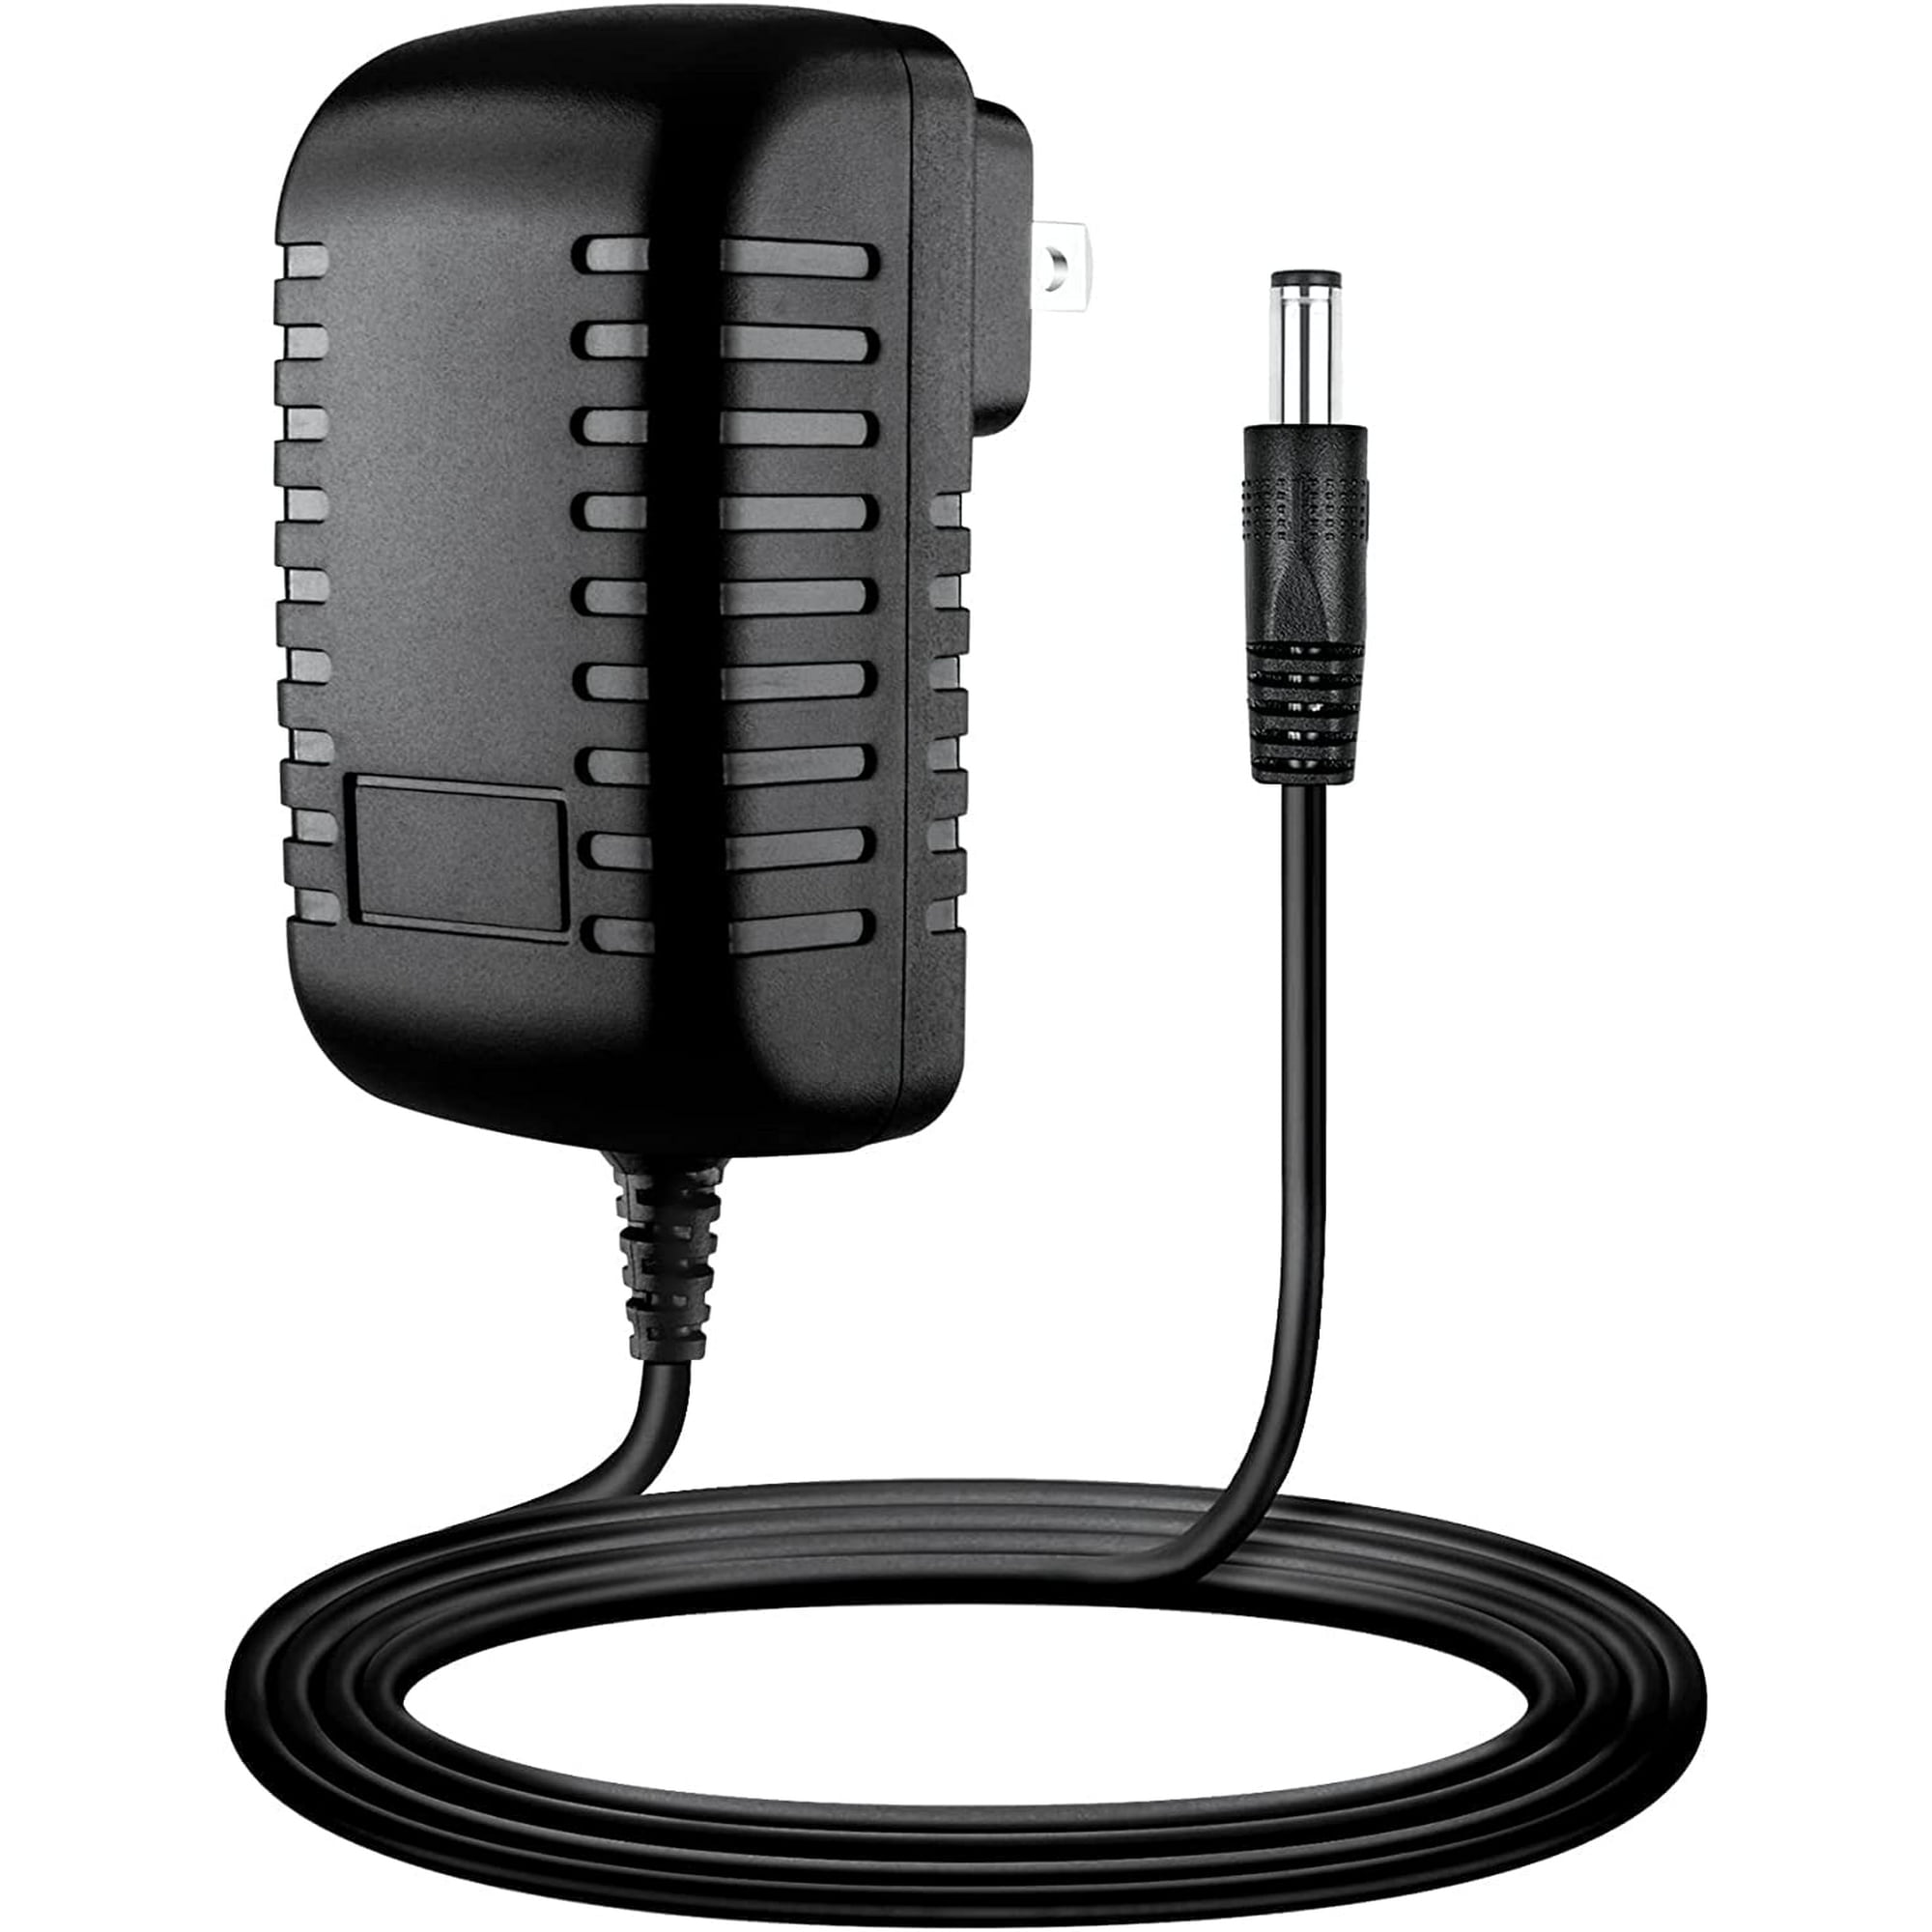 Logitech Audio Receiver Bluetooth in Black - 980000910